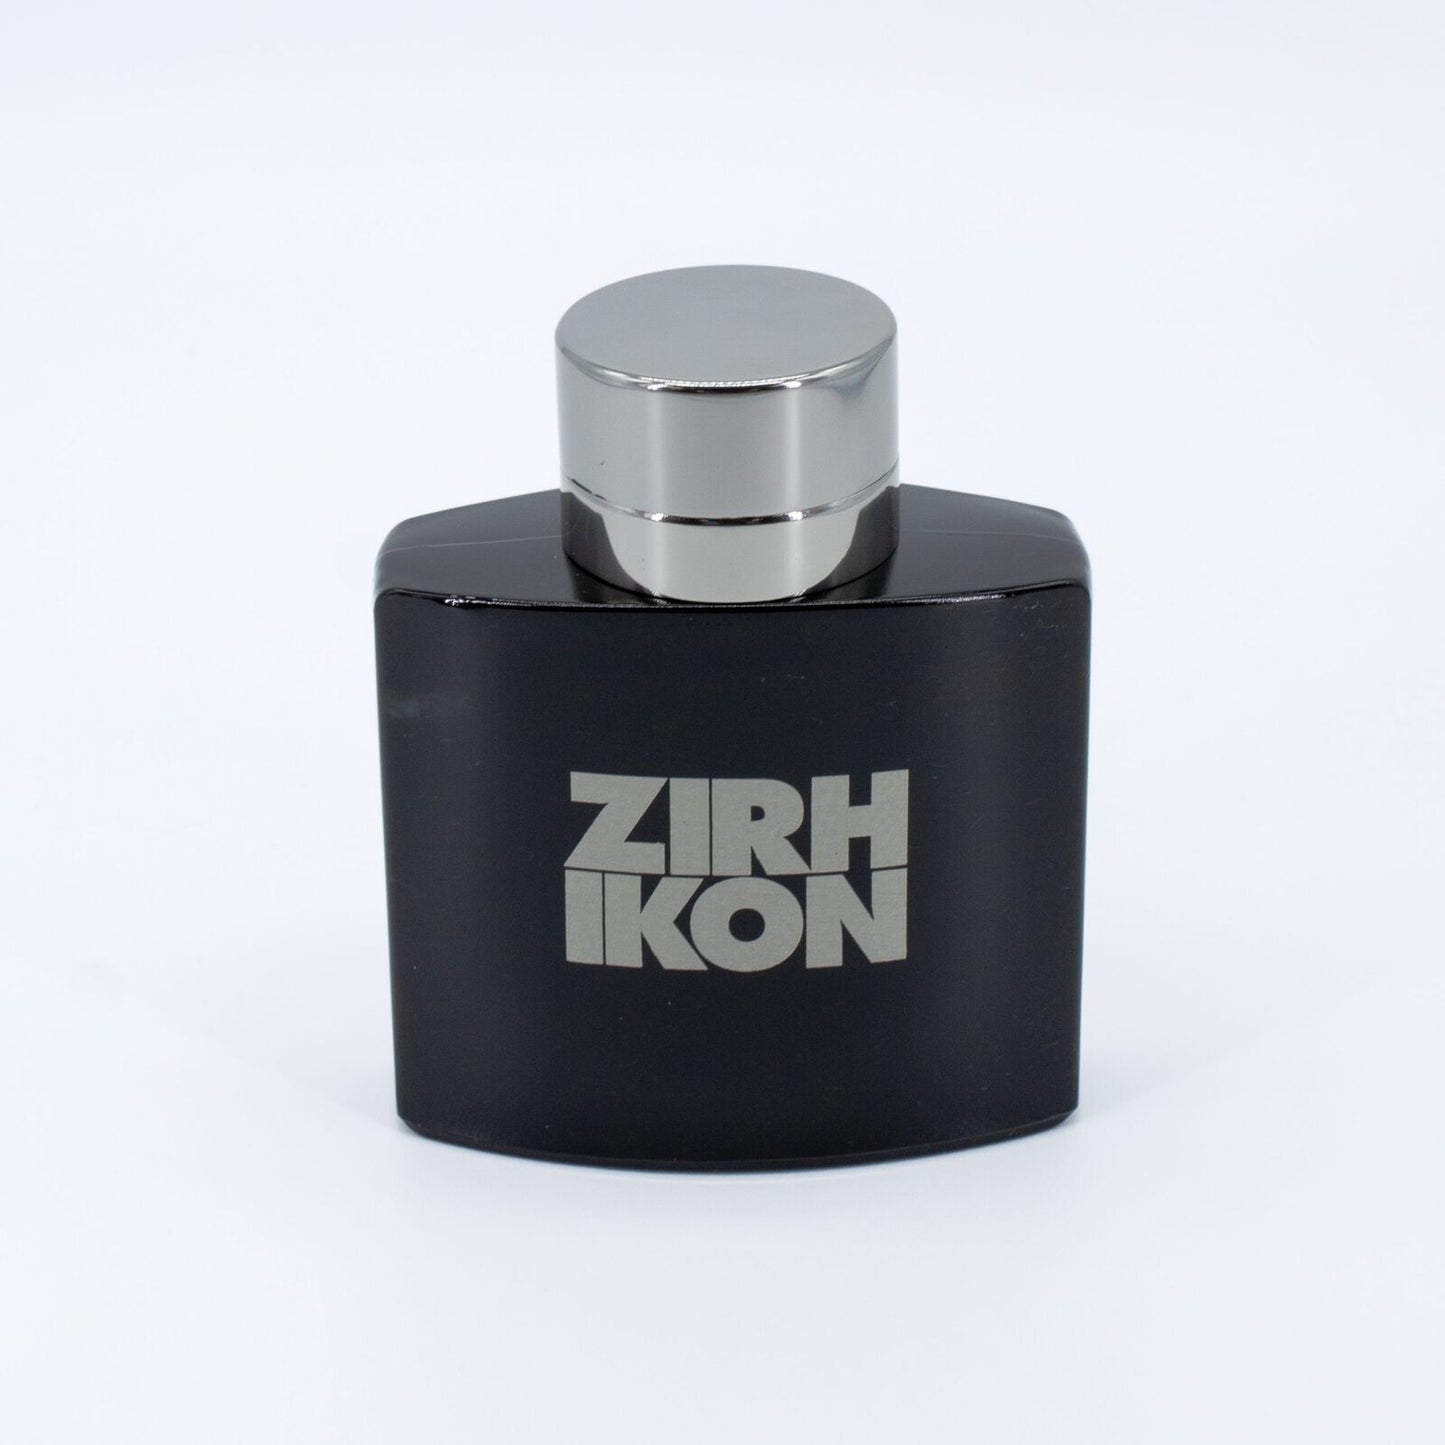 ZIRH Zirh Ikon Eau De Toilette Spray 2.5oz - Imperfect Box